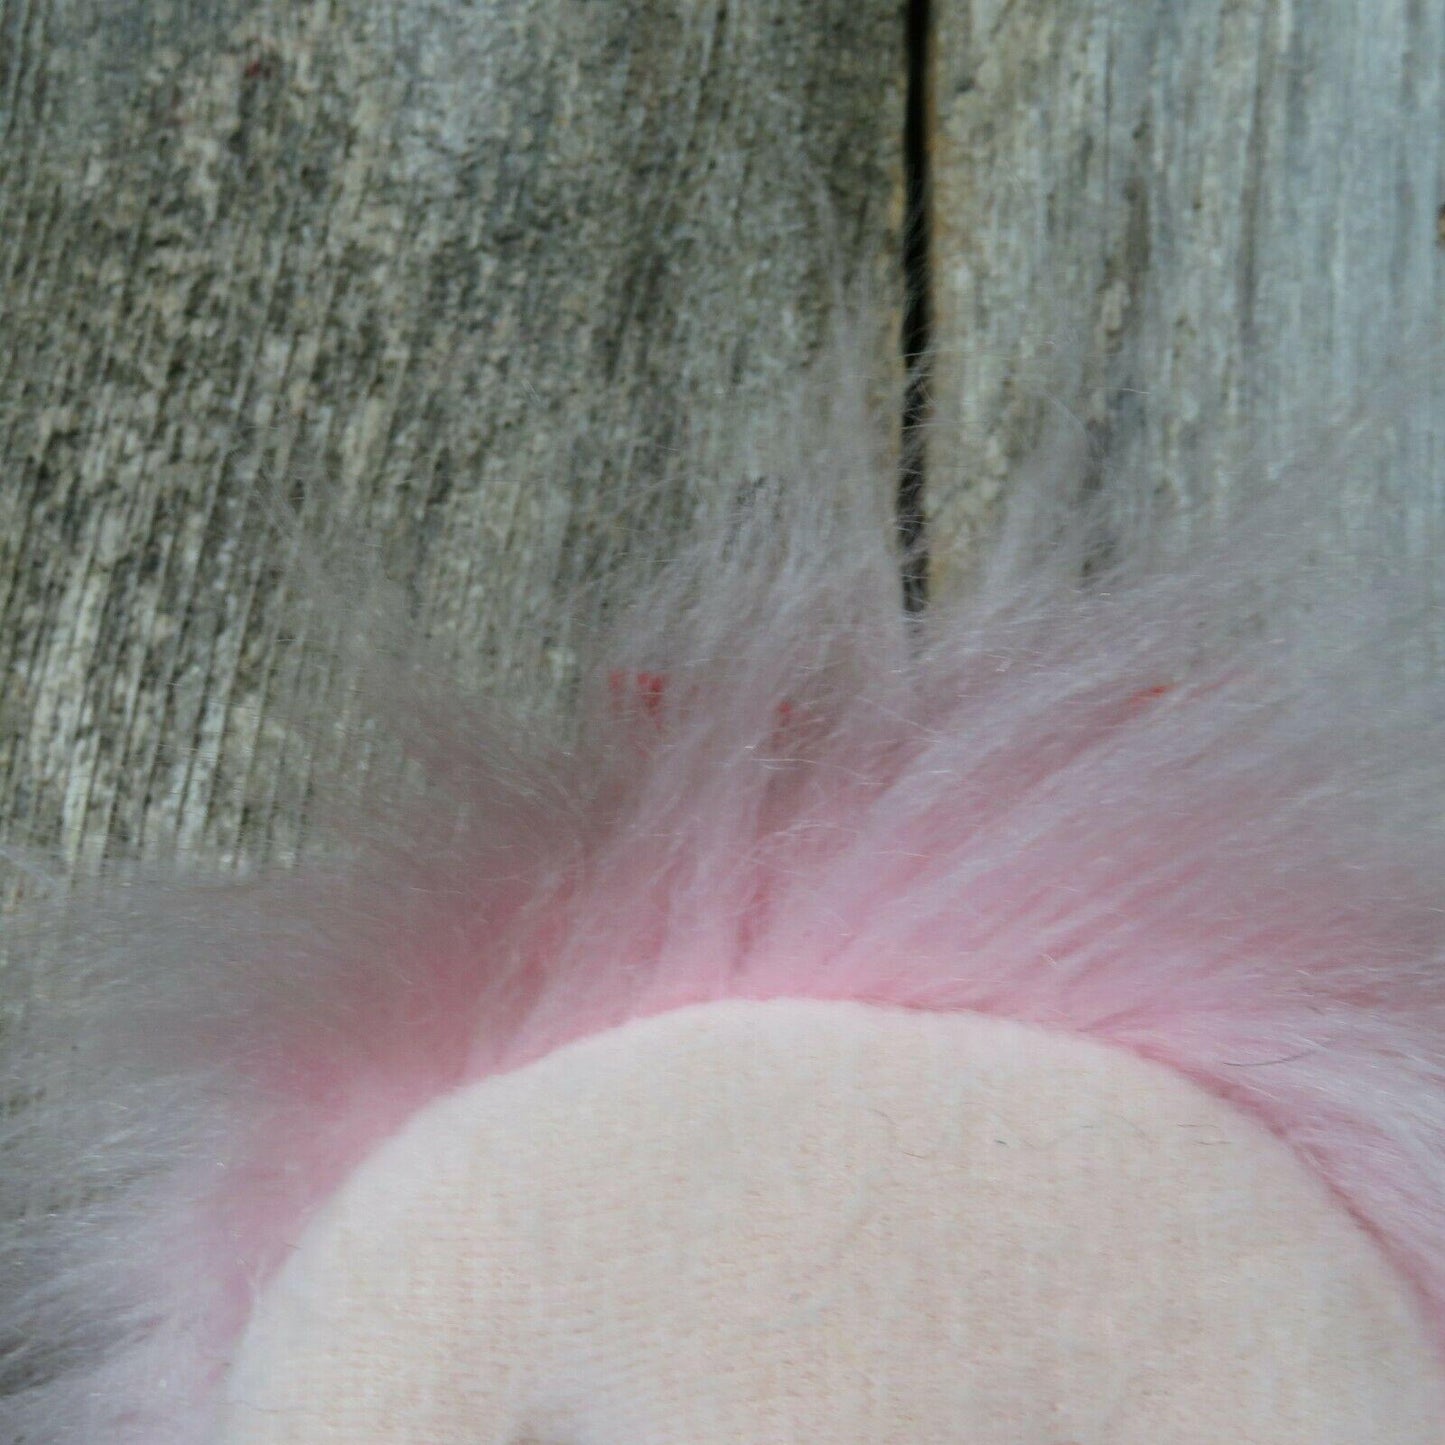 Soft Body Doll Pink Hair Strawberry Blue Dress Fabric Eyes Striped Legs Rag Toy